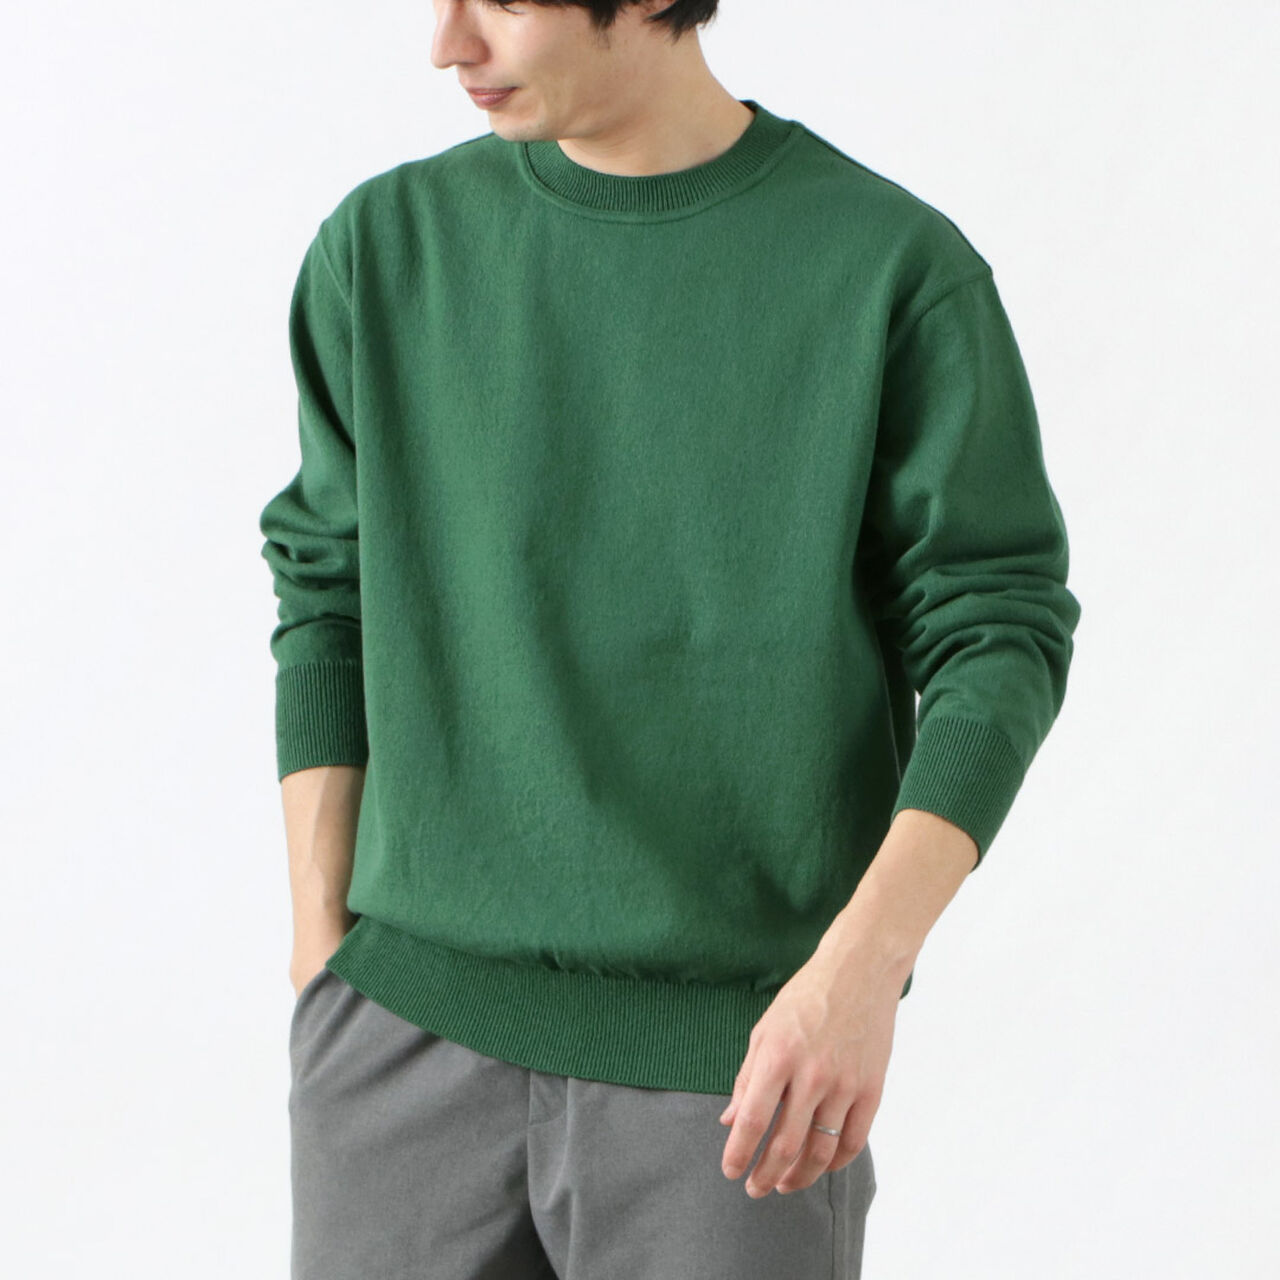 Color Special Order Wave Cotton Knit Pullover,DarkGreen, large image number 0